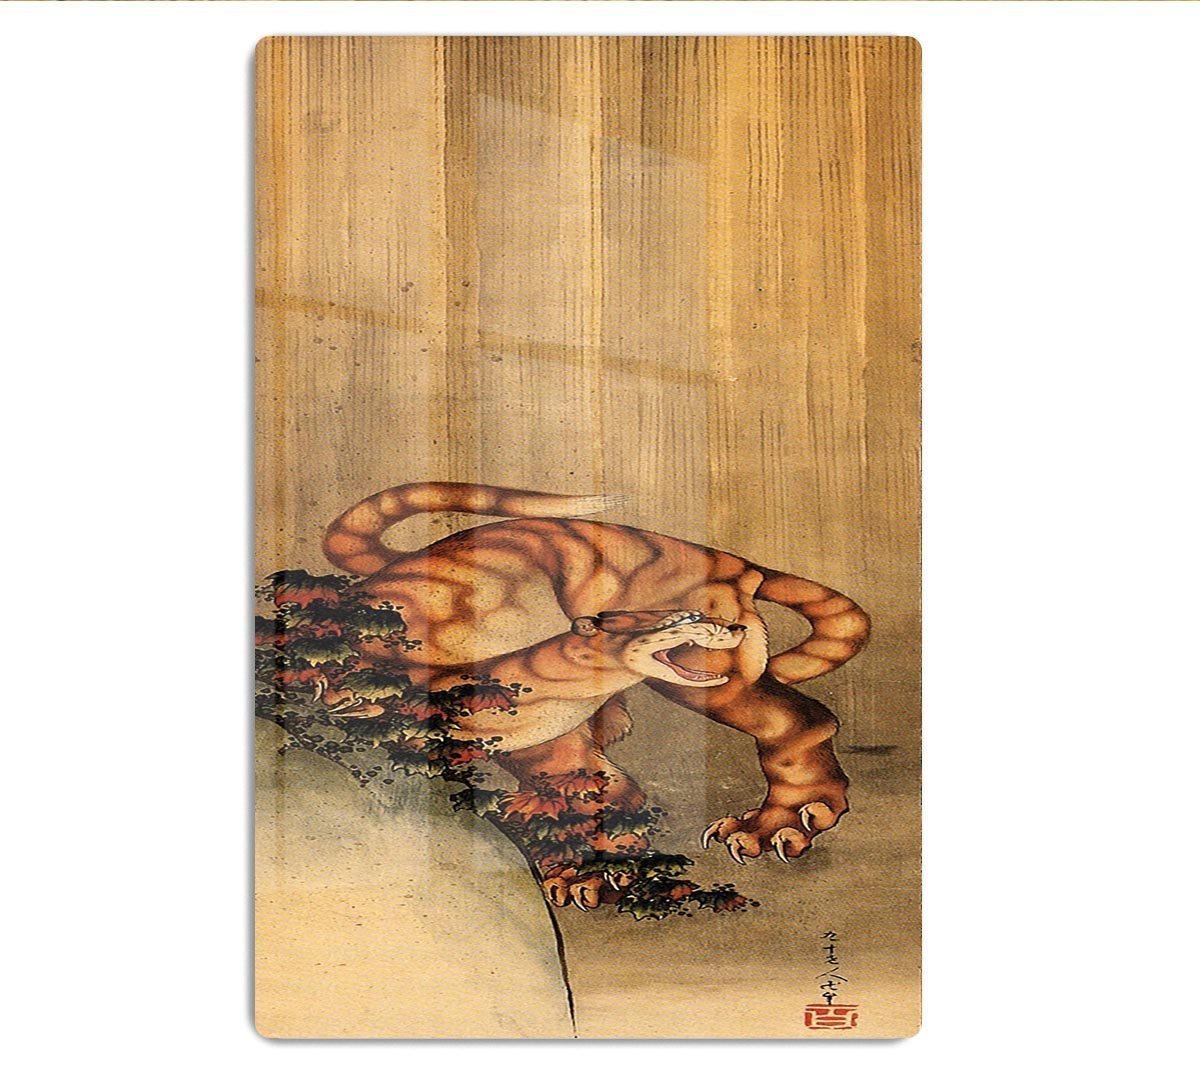 Tiger in the rain by Hokusai HD Metal Print